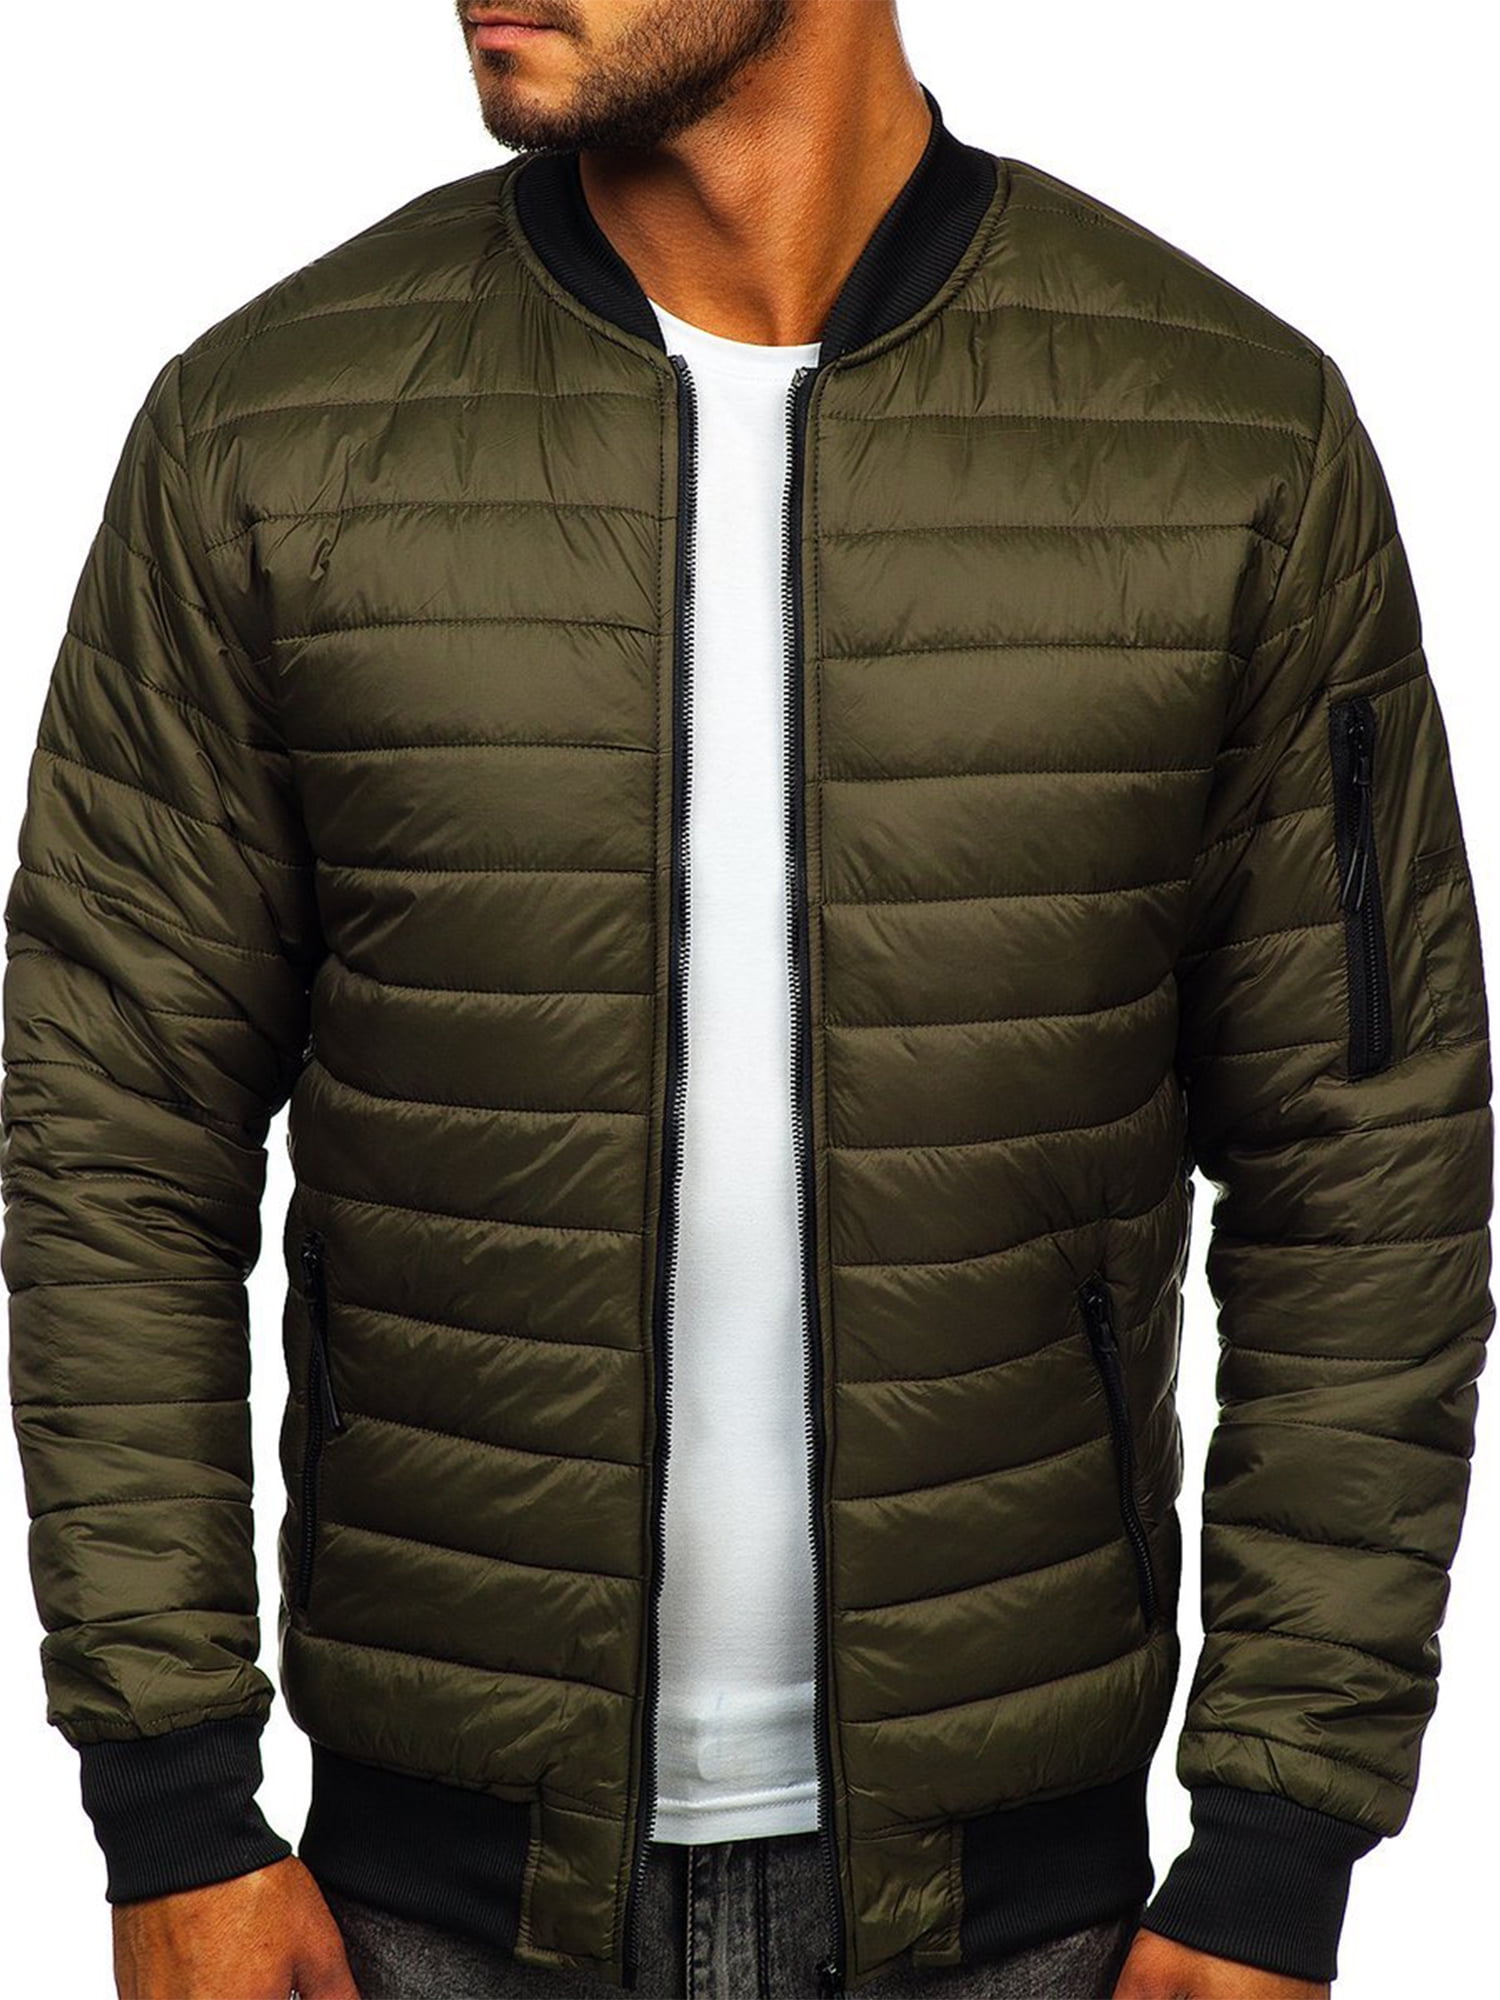 Men’s Bomber Jacket Slim Fit NRUTUP Subtle Print Flight Jacket Lightweight Windbreaker Full Zip Varsity Jacket Casual